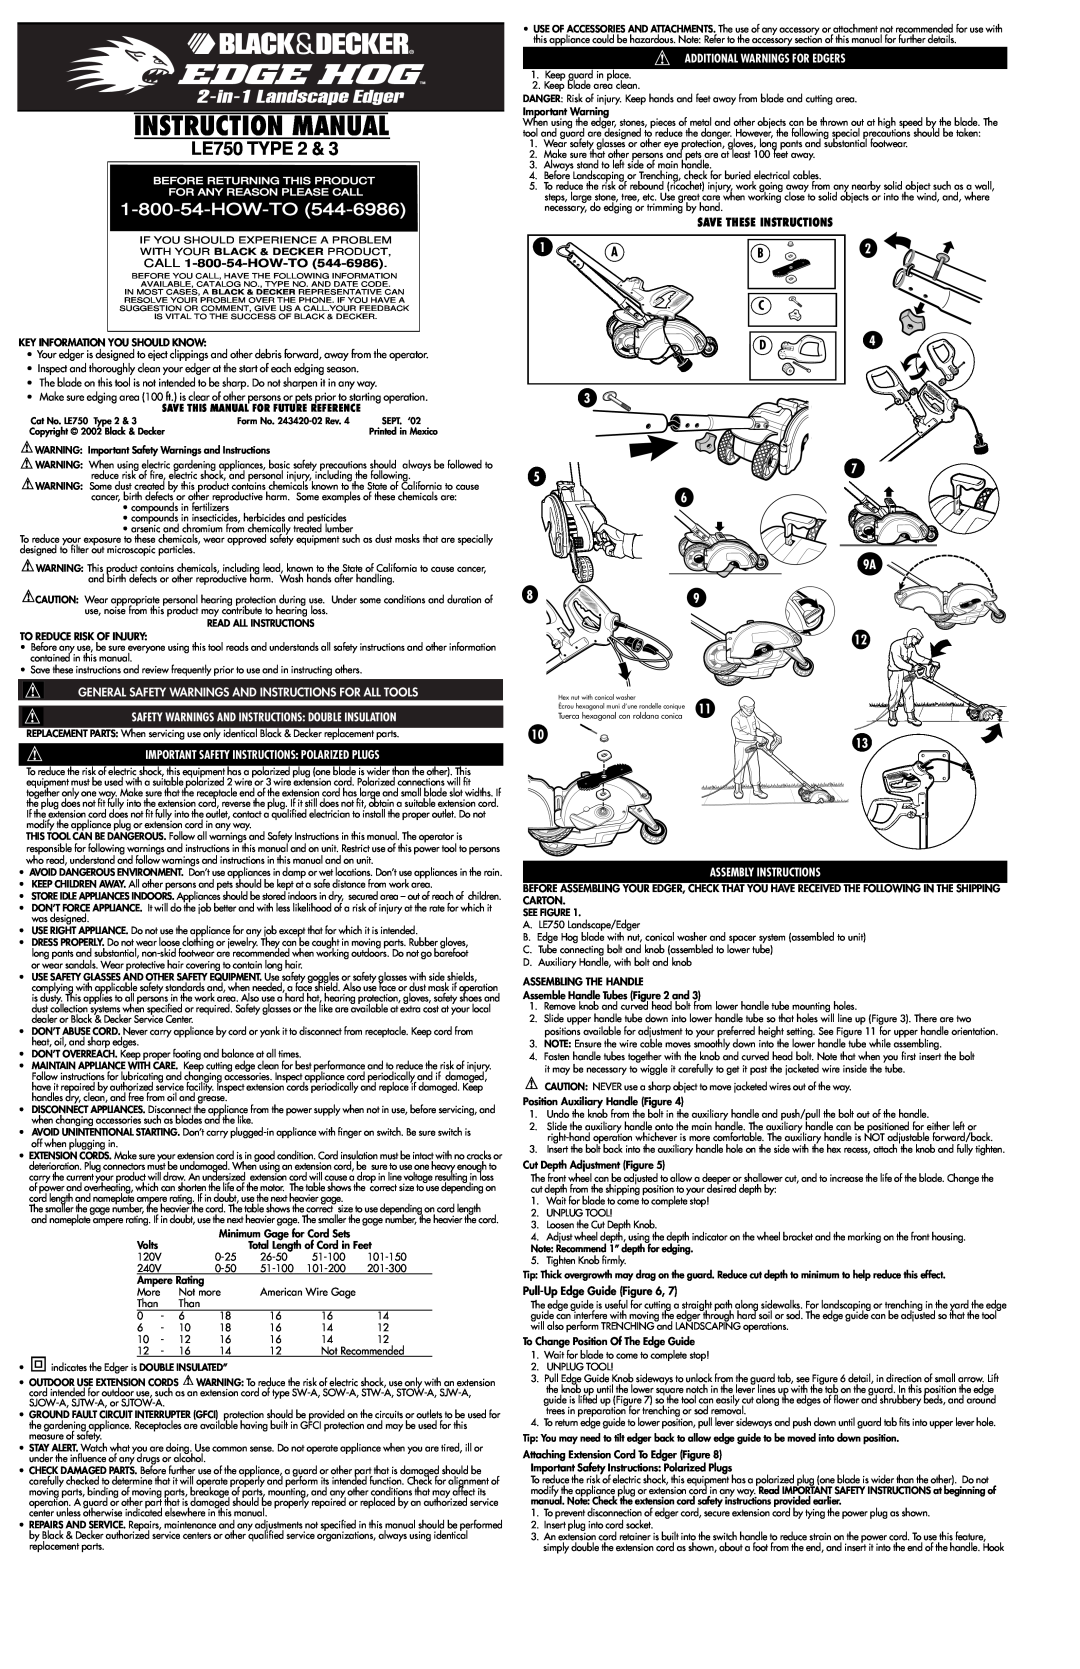 Black & Decker LE760 instruction manual Thank you for choosing Black & Decker, Catalog No. LE750, EH1000 